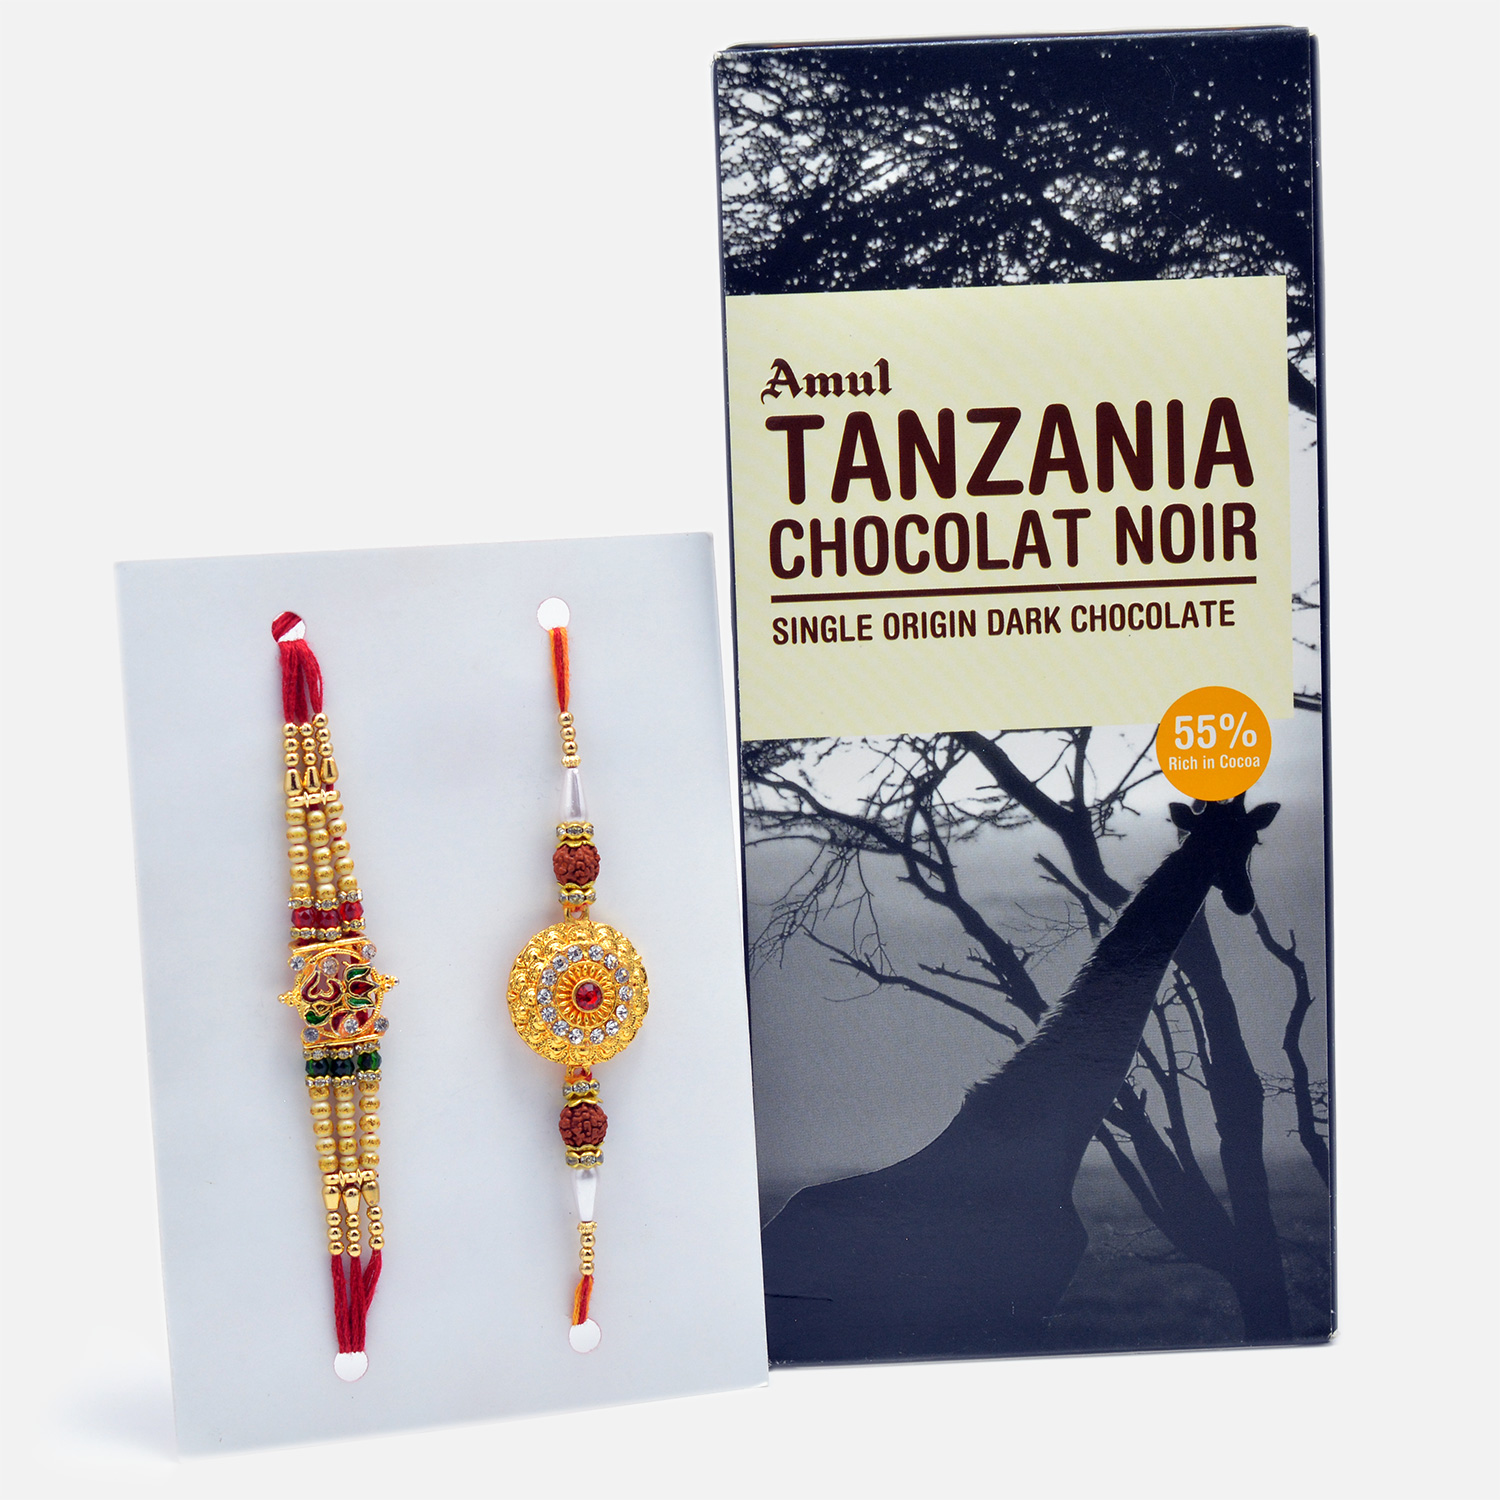 Golden Rakhi Set of 2 with Amul Tanzania Chocolat Noir Single Origin Dark Chocolate